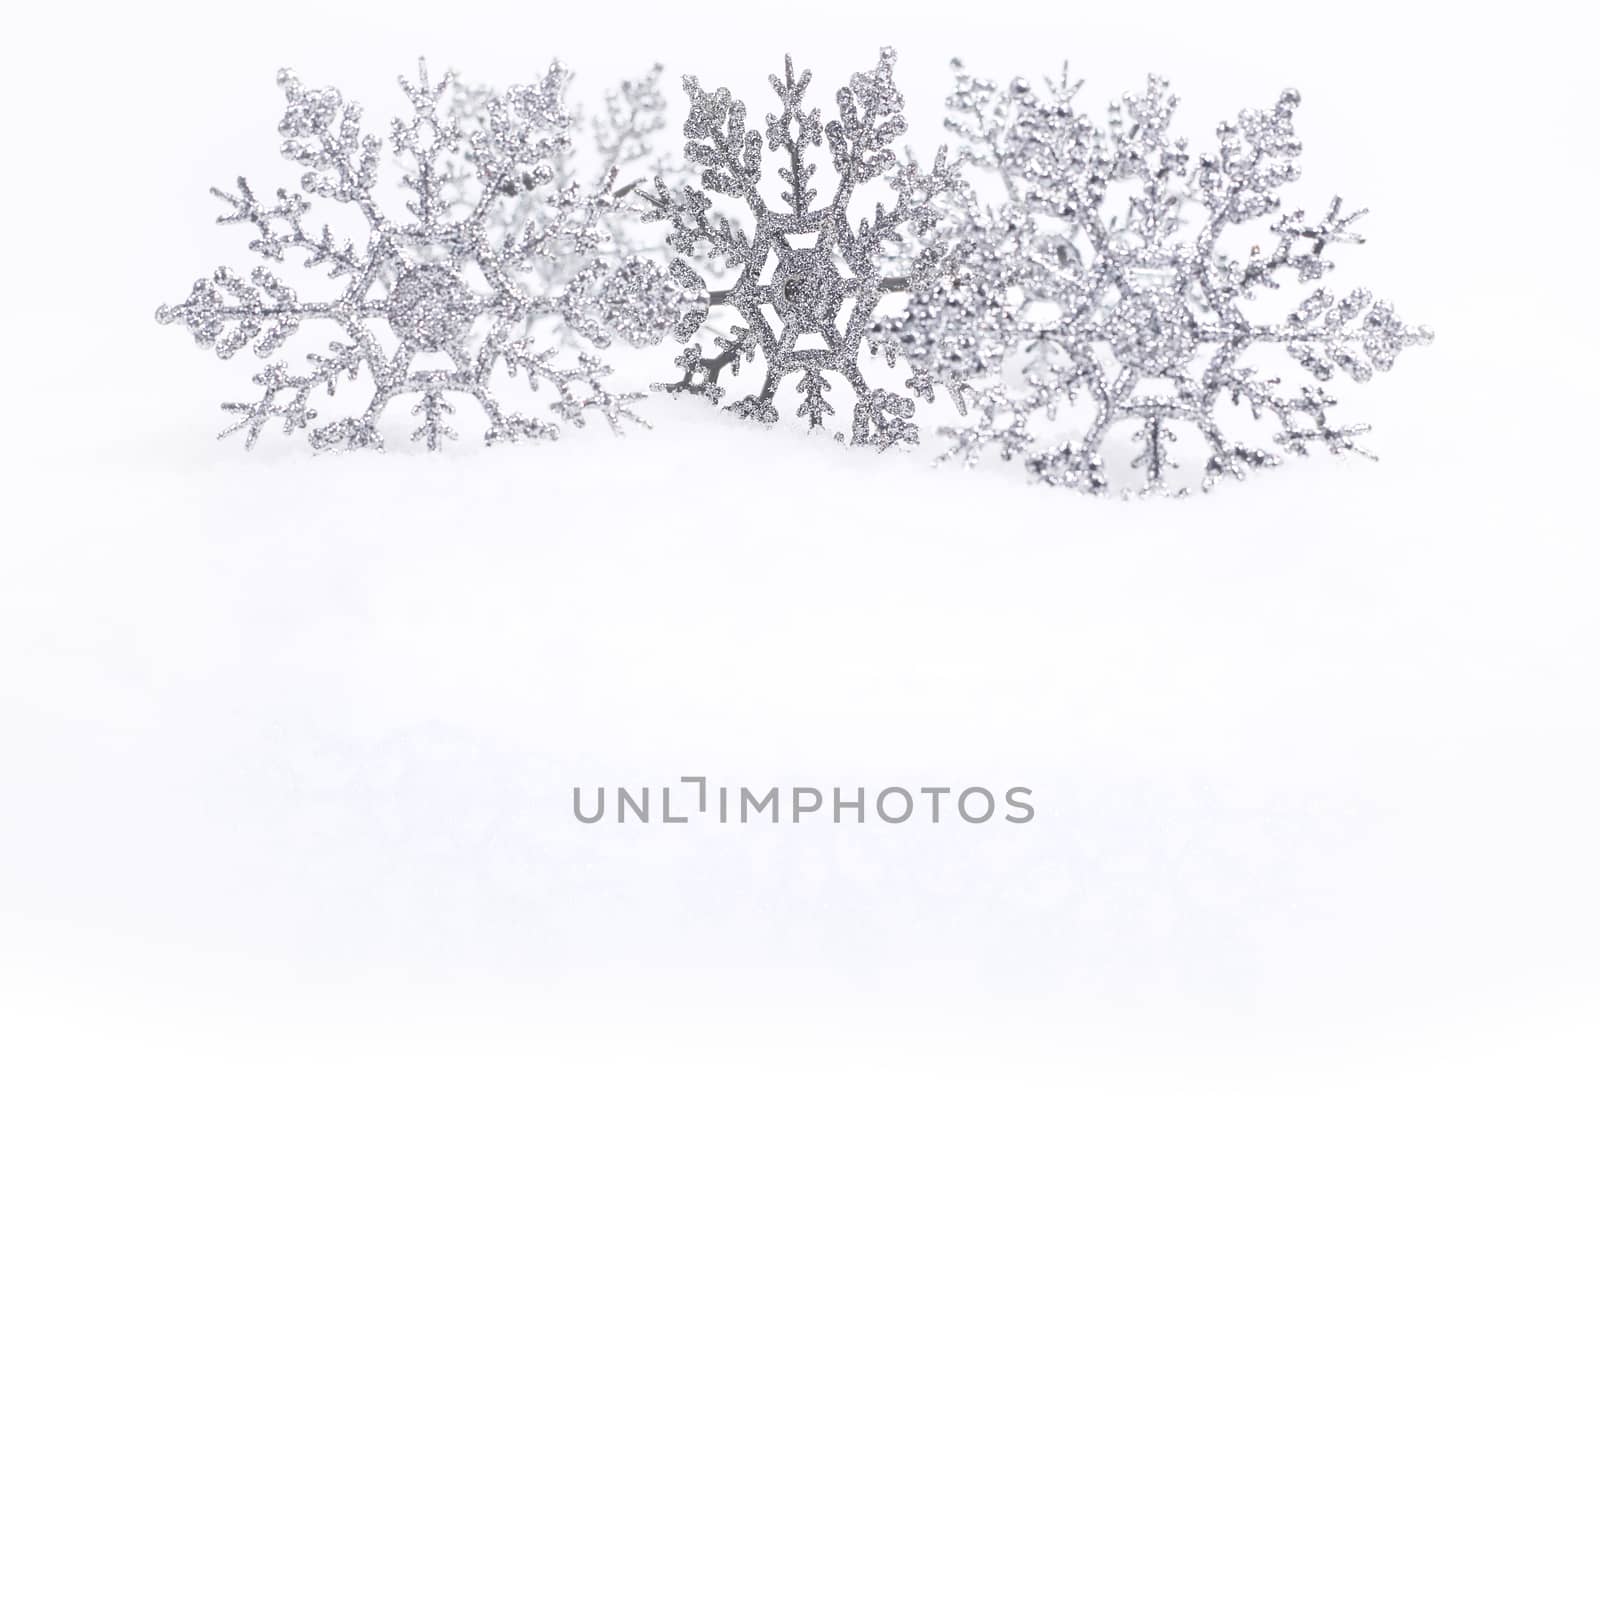 Decorative silver snowflakes on snow, white copy space